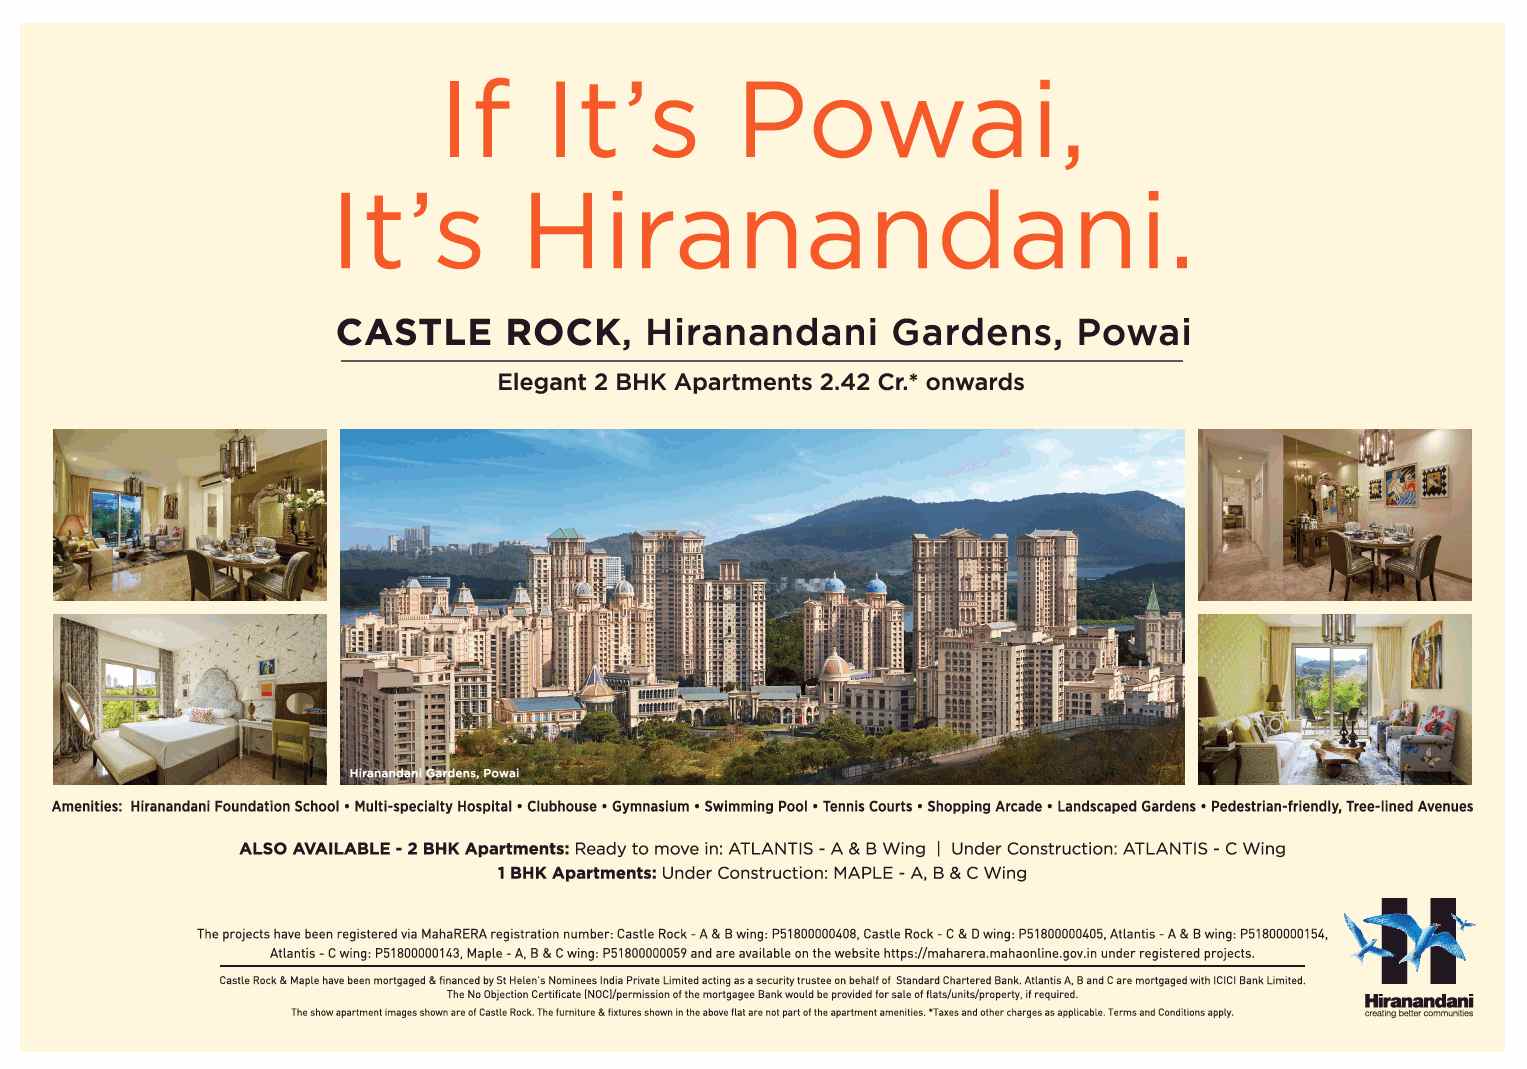 Book elegant 2 BHK apartments @ Rs 2.42 cr at Hiranandani Castle Rock in Powai, Mumbai